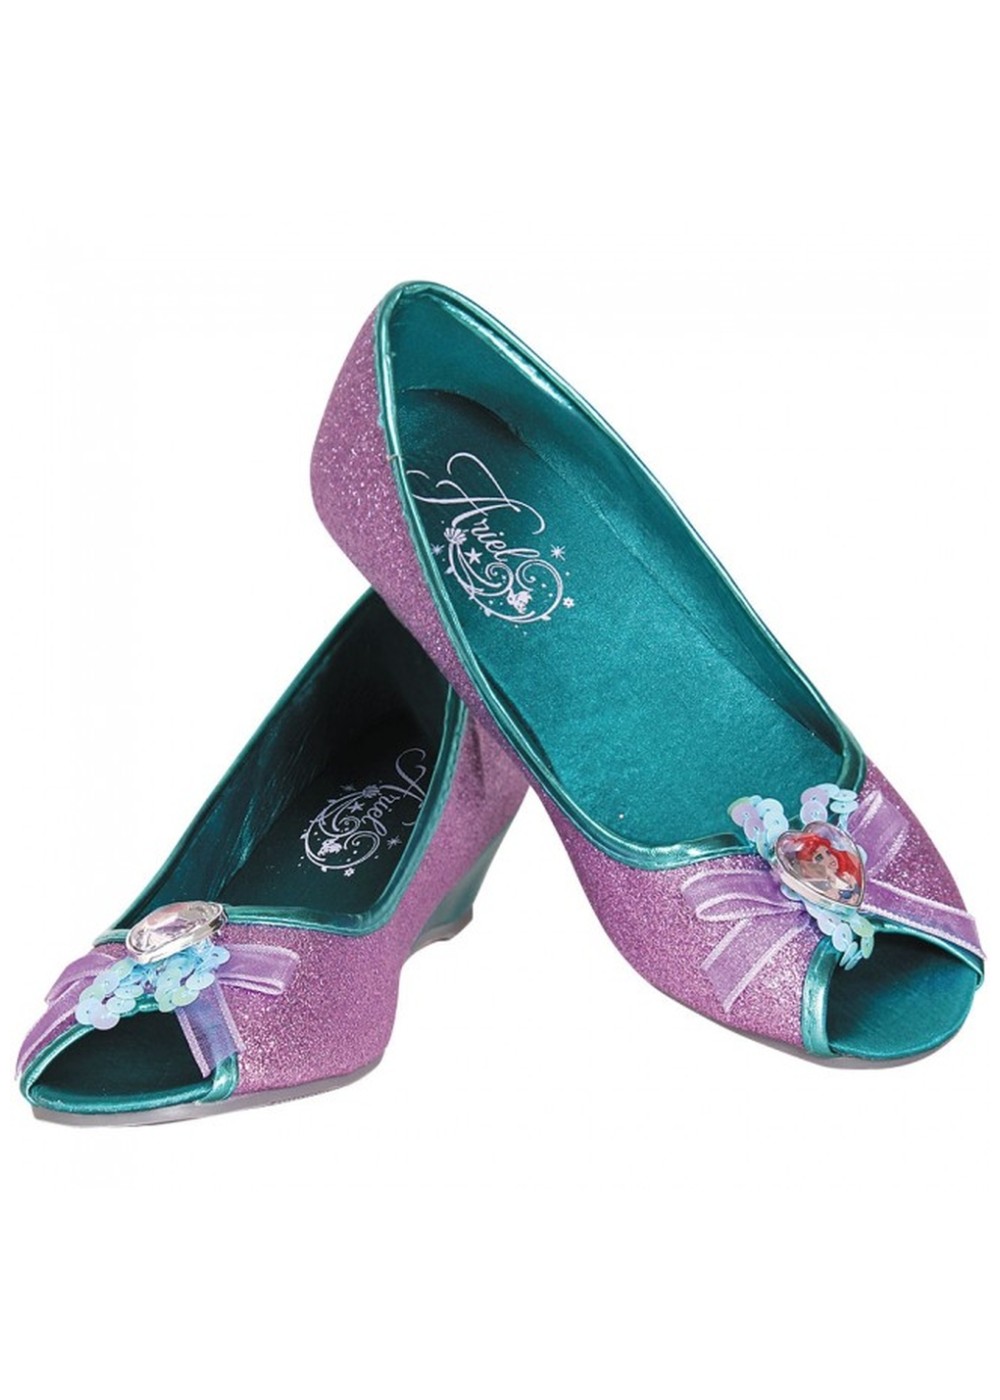 Disney Ariel Girls Shoes